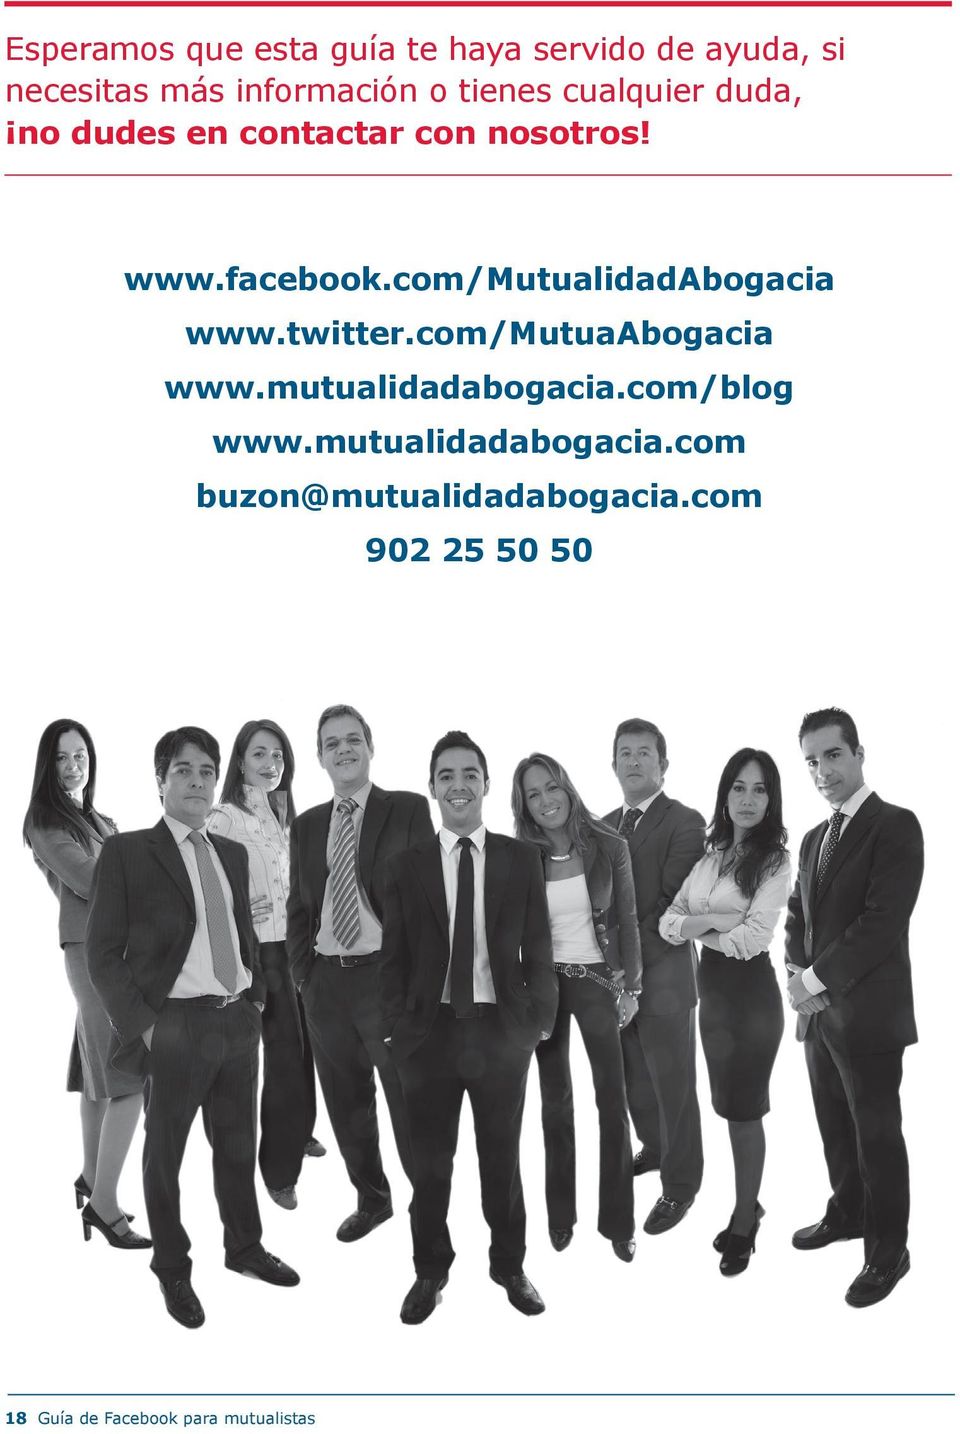 wwwfacebookcom/mutualidadabogacia wwwtwittercom/mutuaabogacia